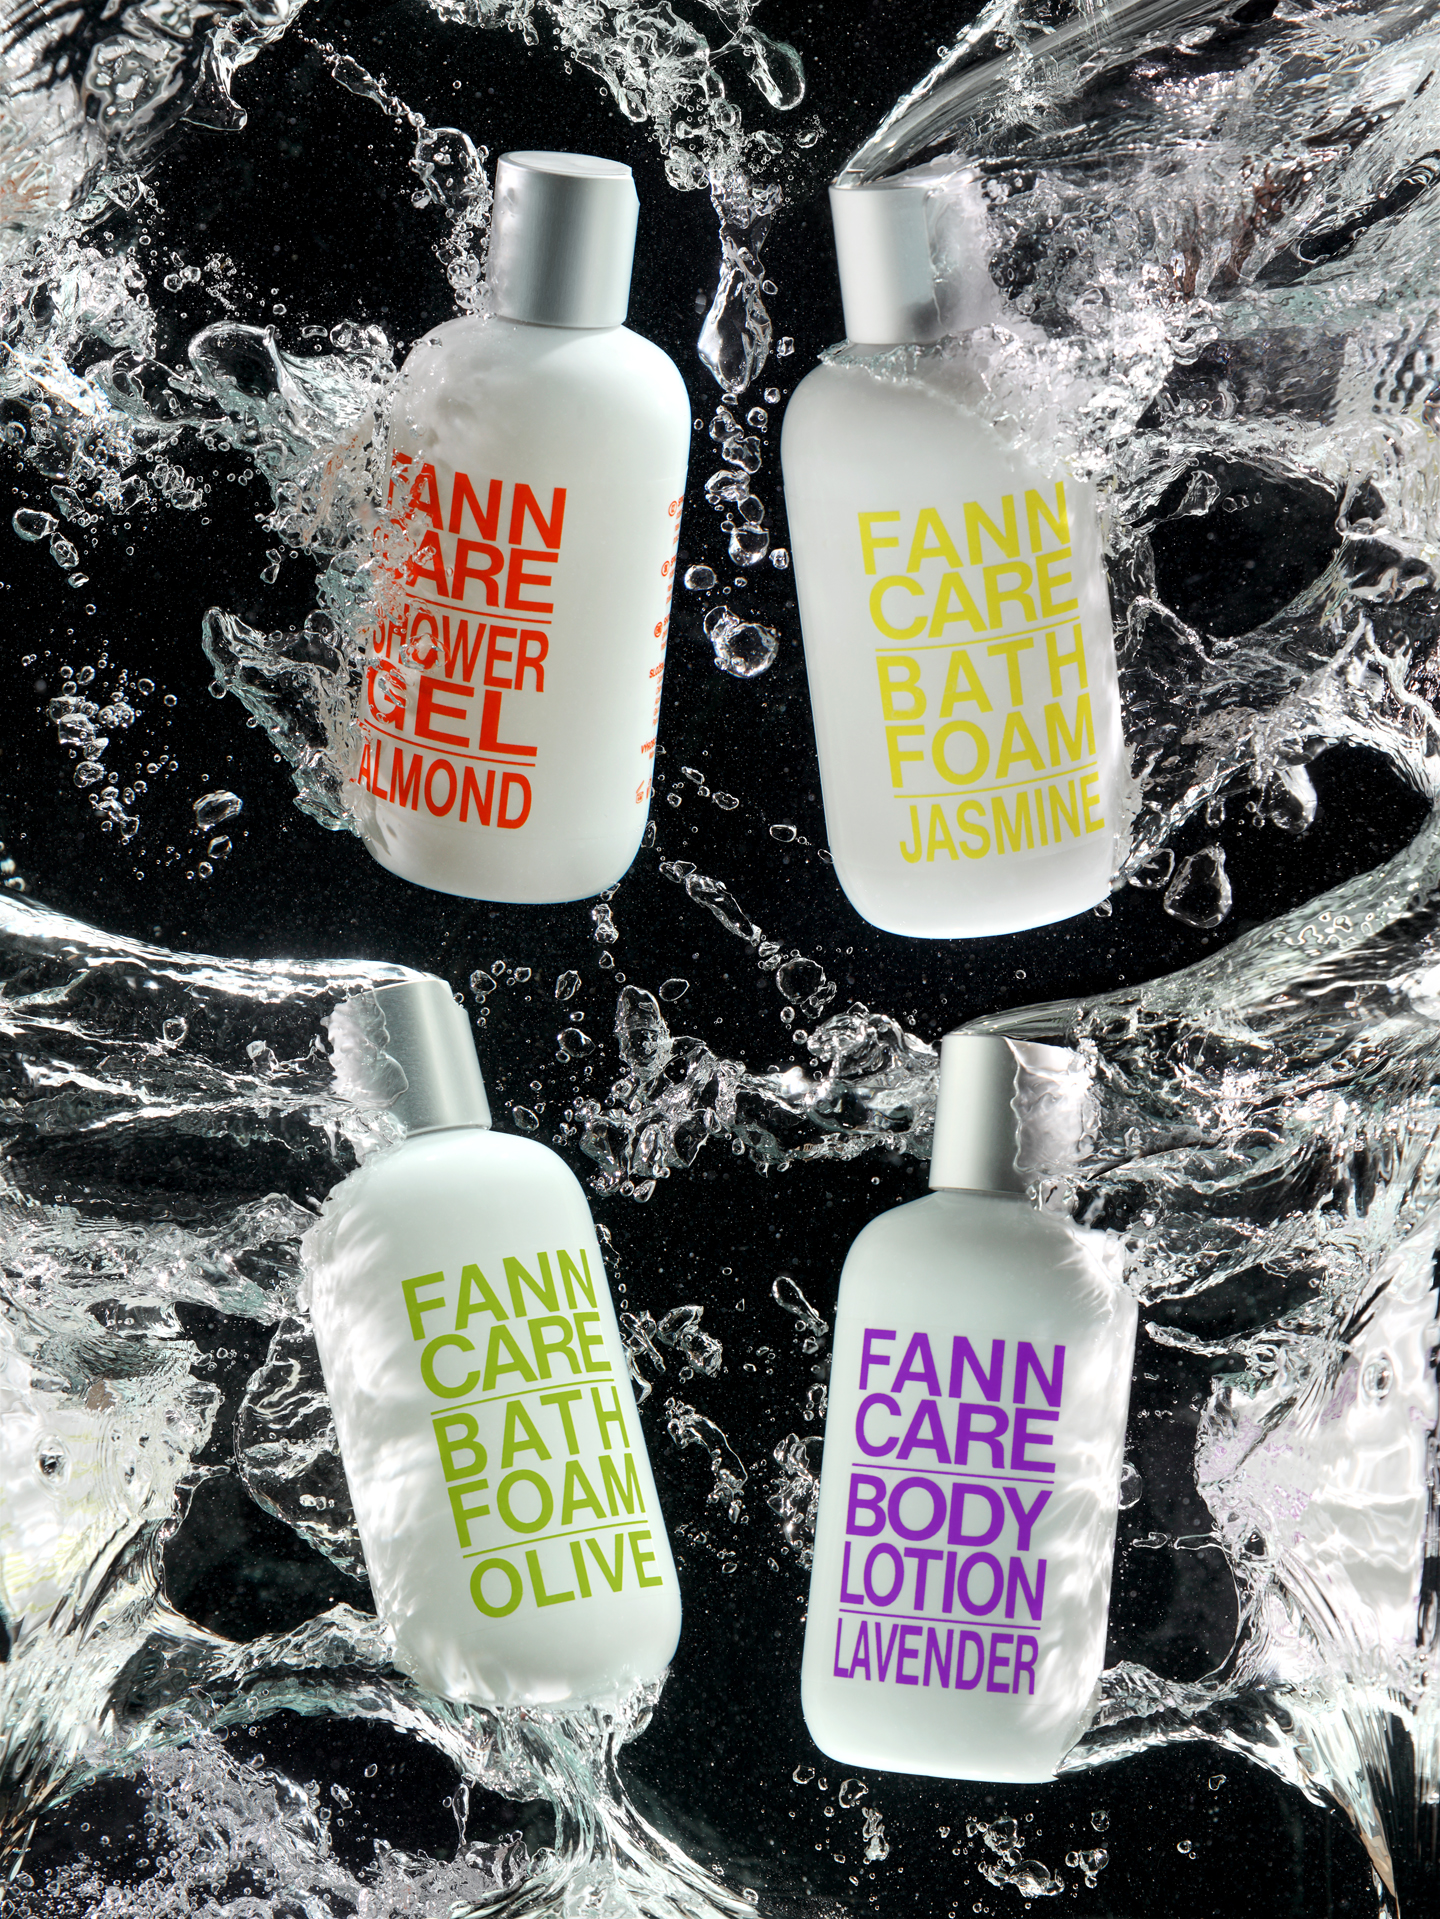 Parfumerie Fann | Webdesign Blog